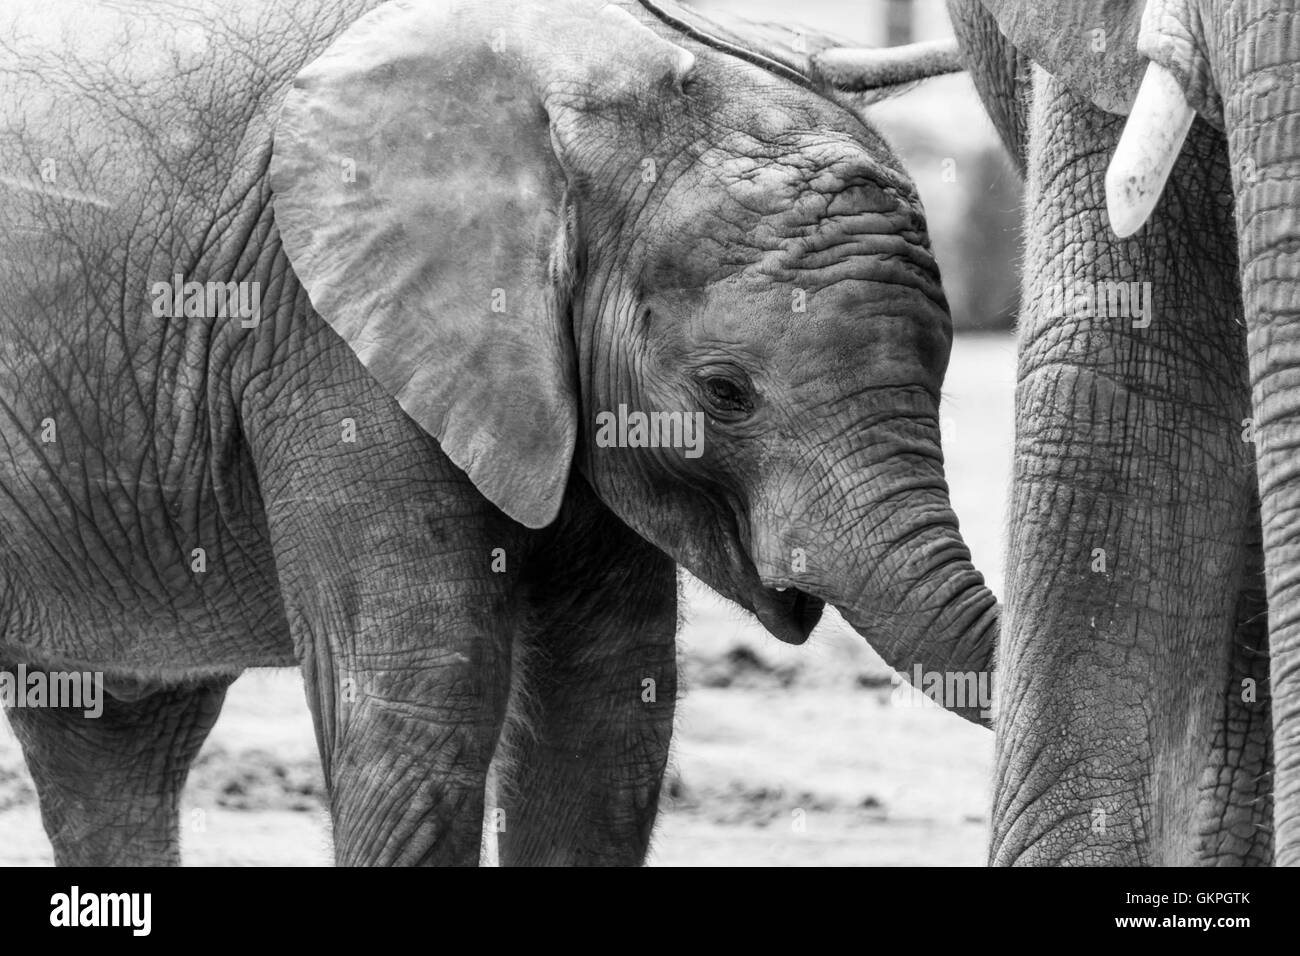 Elefante joven ternero beber de la madre Foto de stock